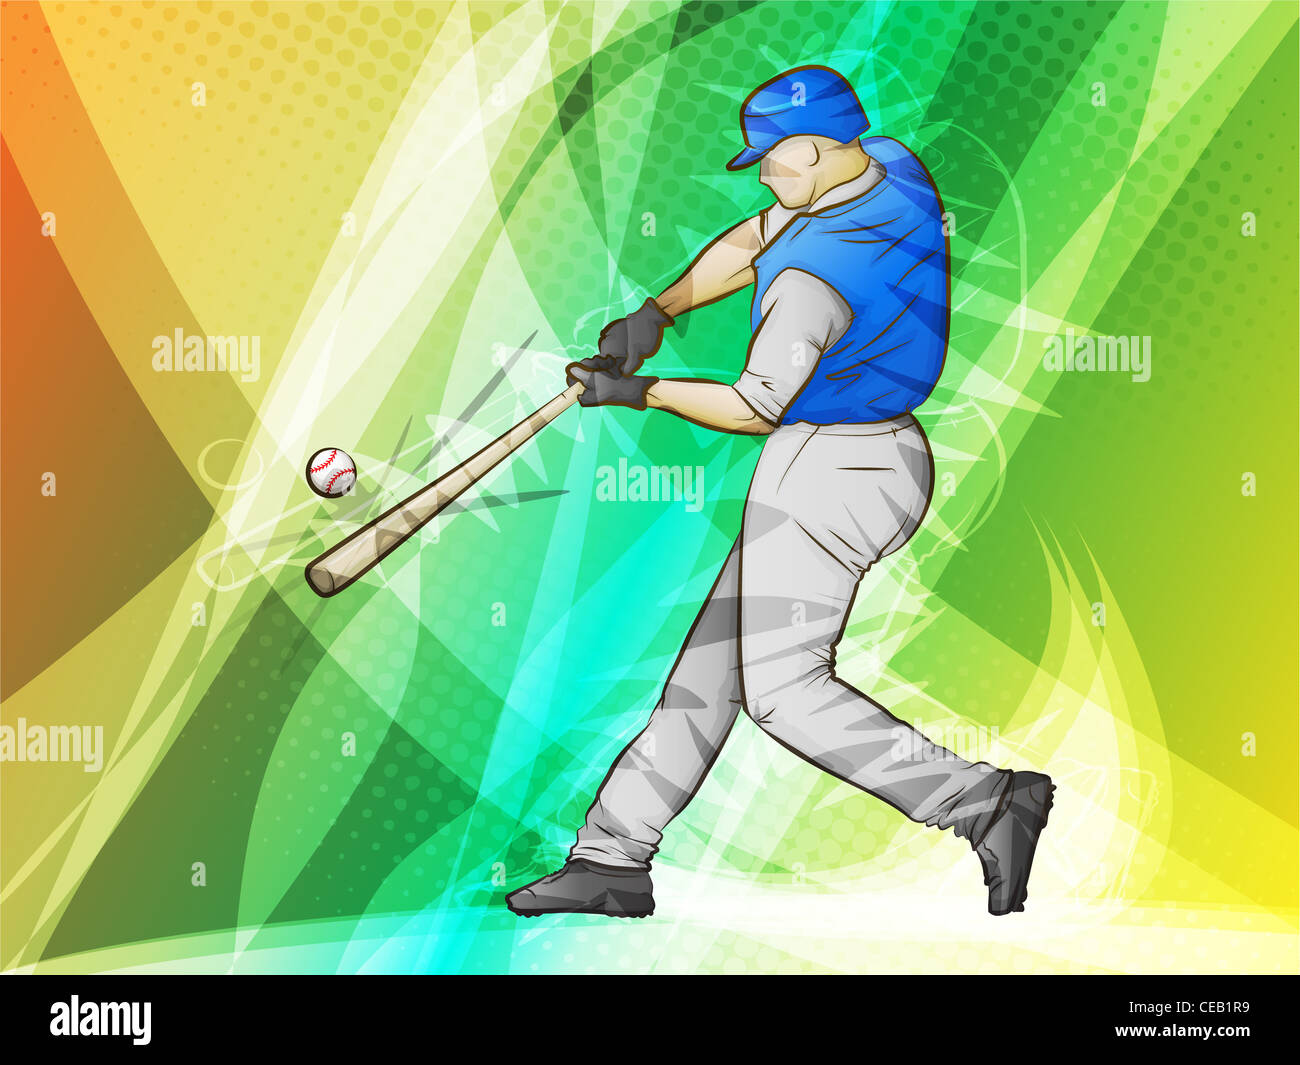 Baseball/Abstract Sports/Batter swinging for a homerun Stock Photo